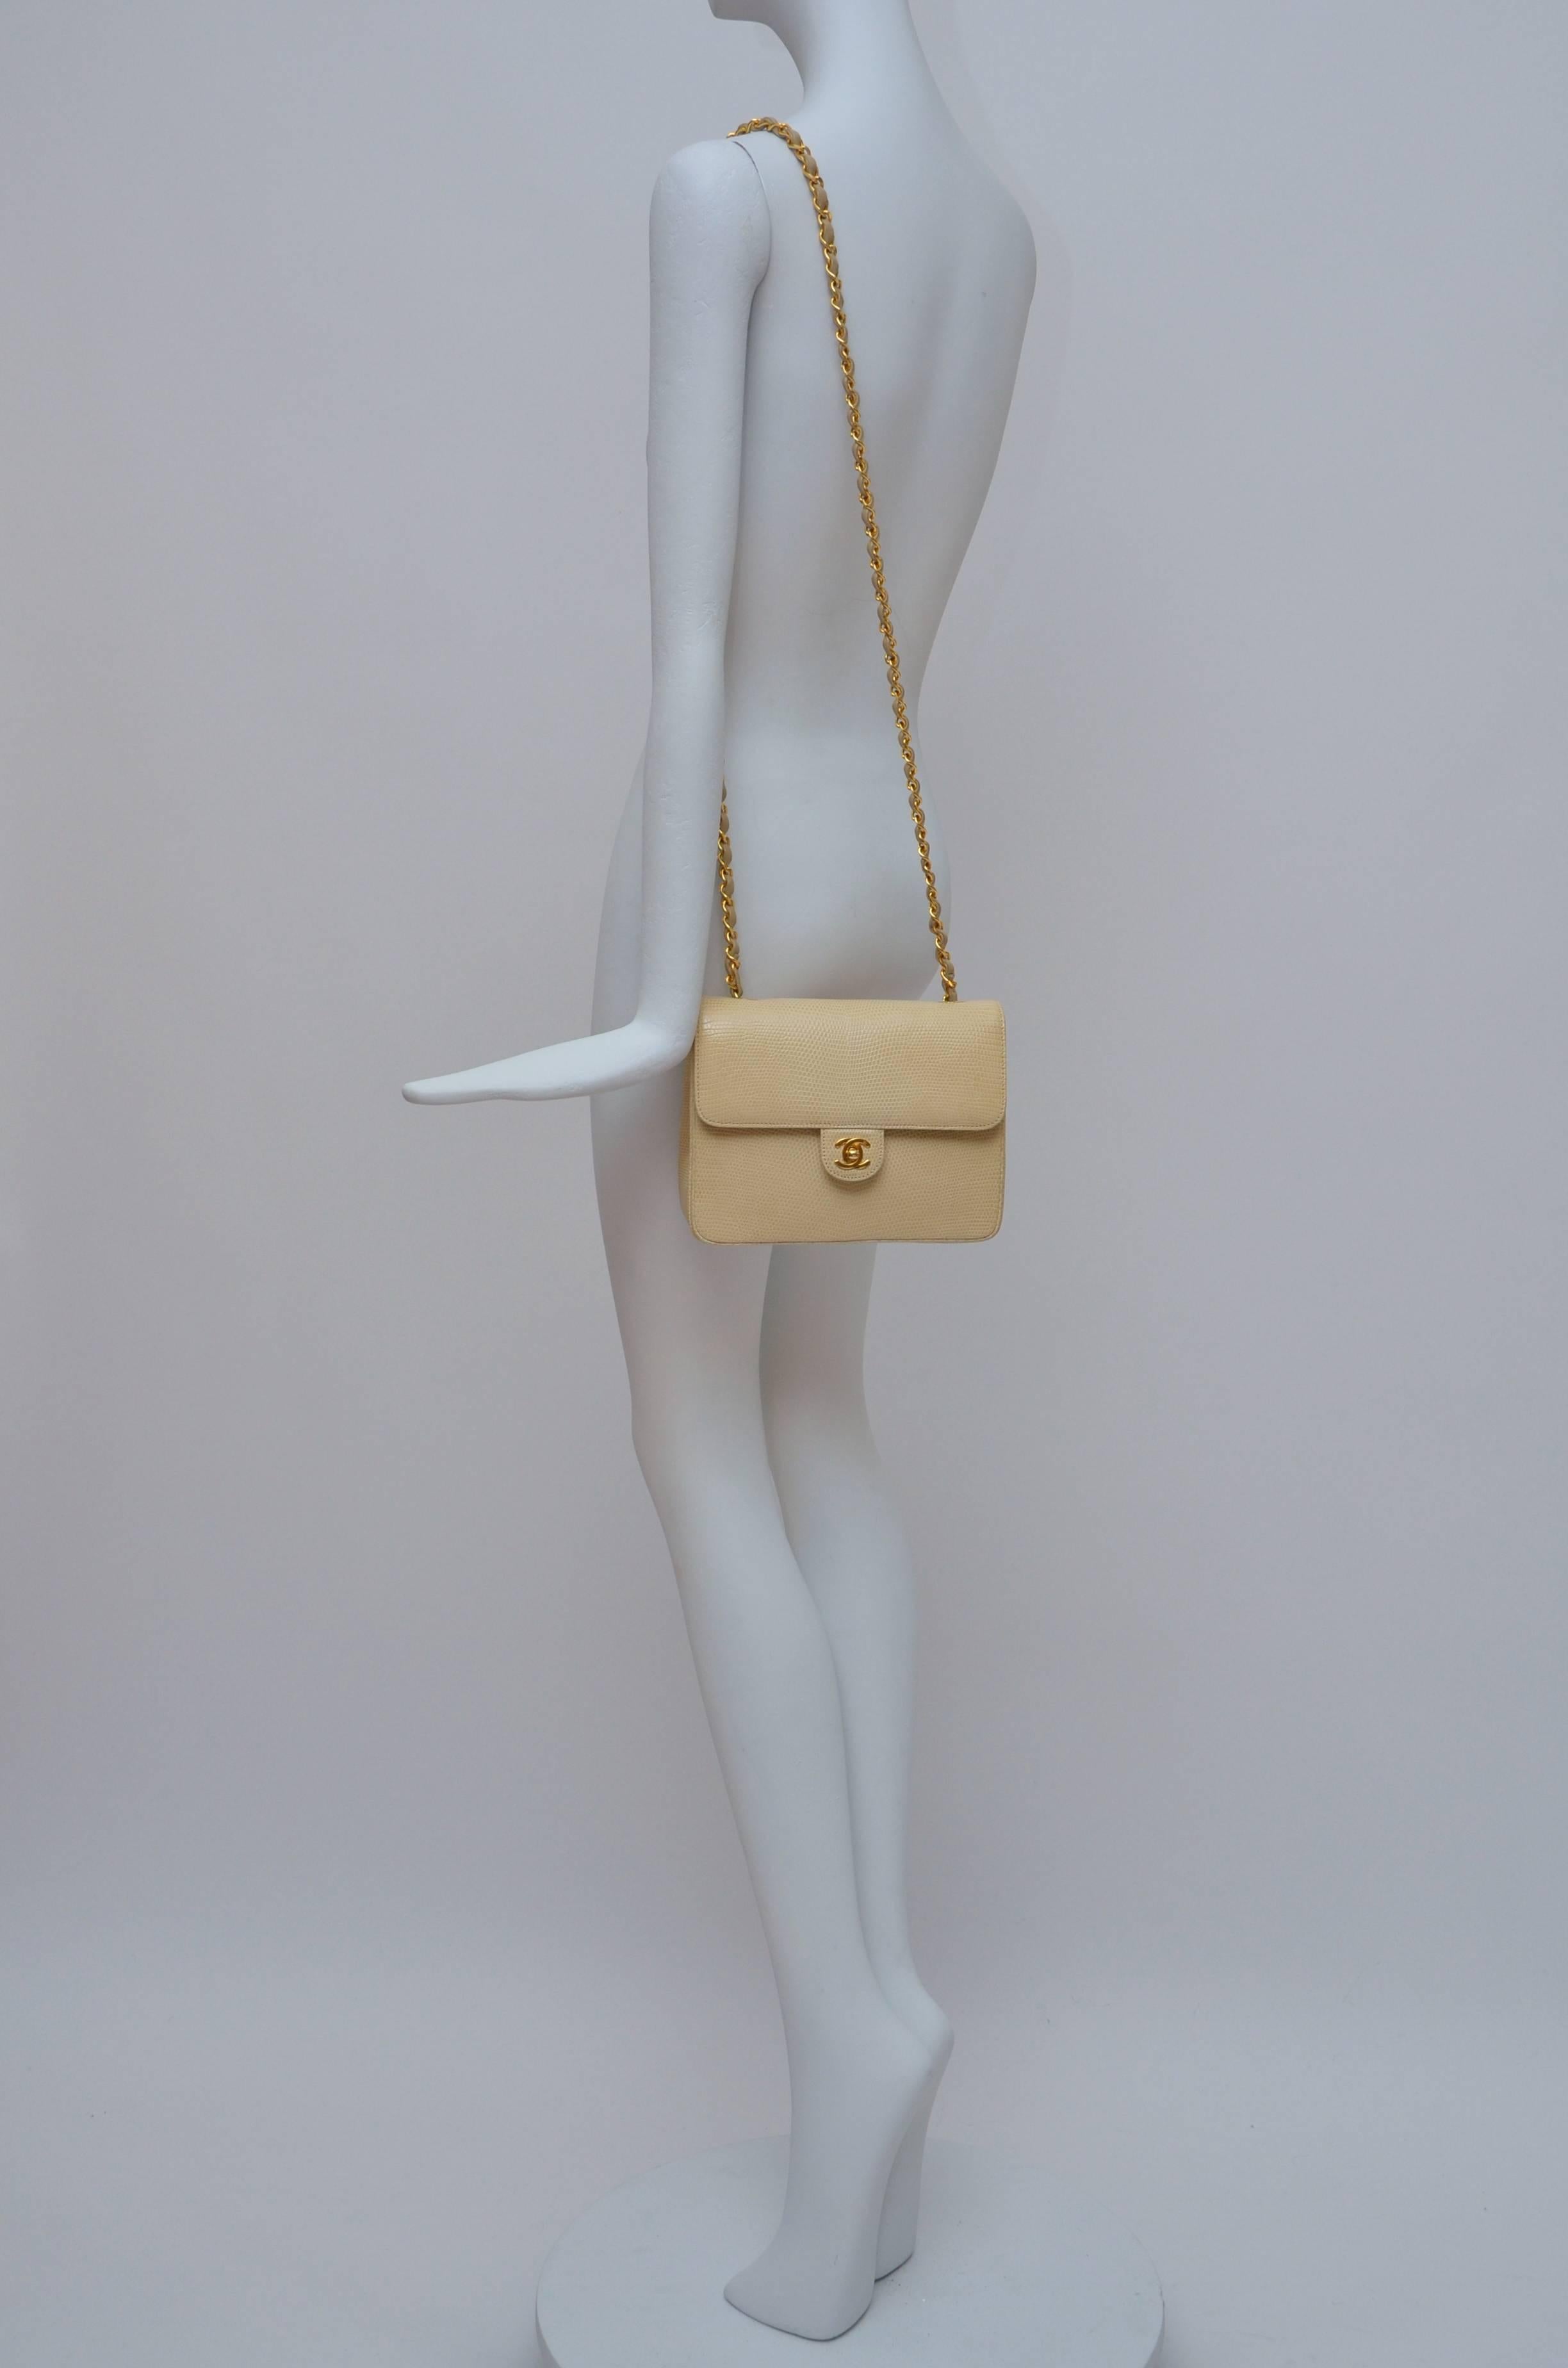 Chanel Mini Lizard Handbag, 1990s     1